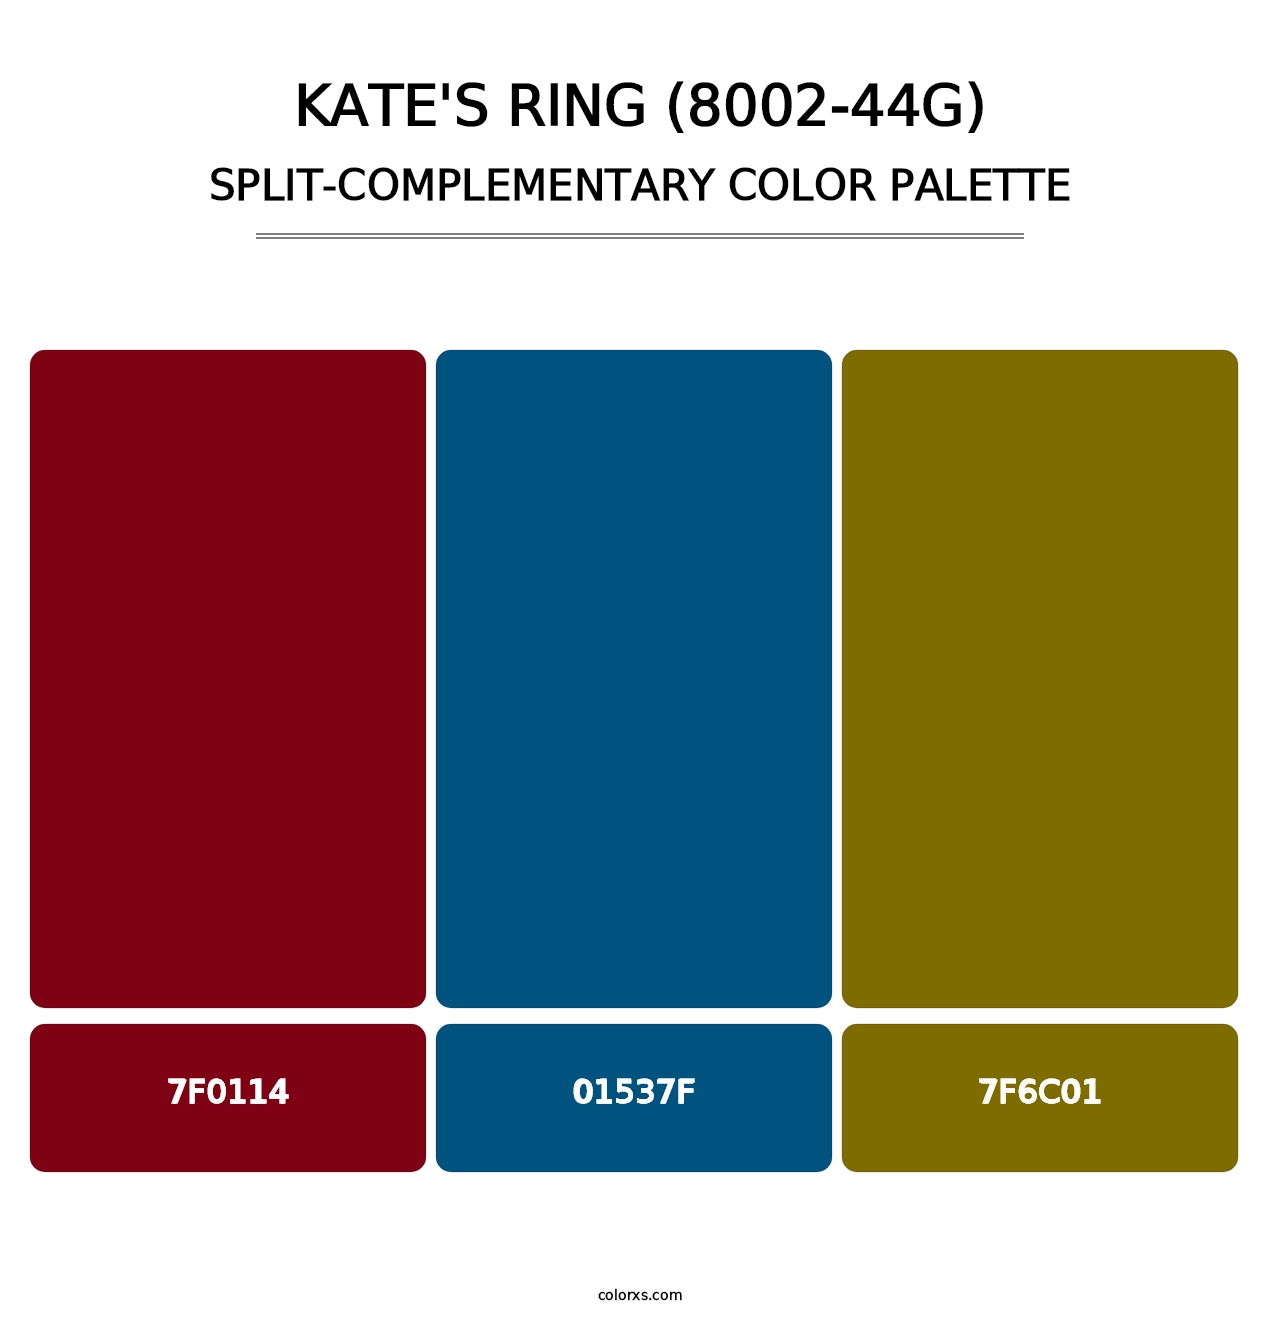 Kate's Ring (8002-44G) - Split-Complementary Color Palette